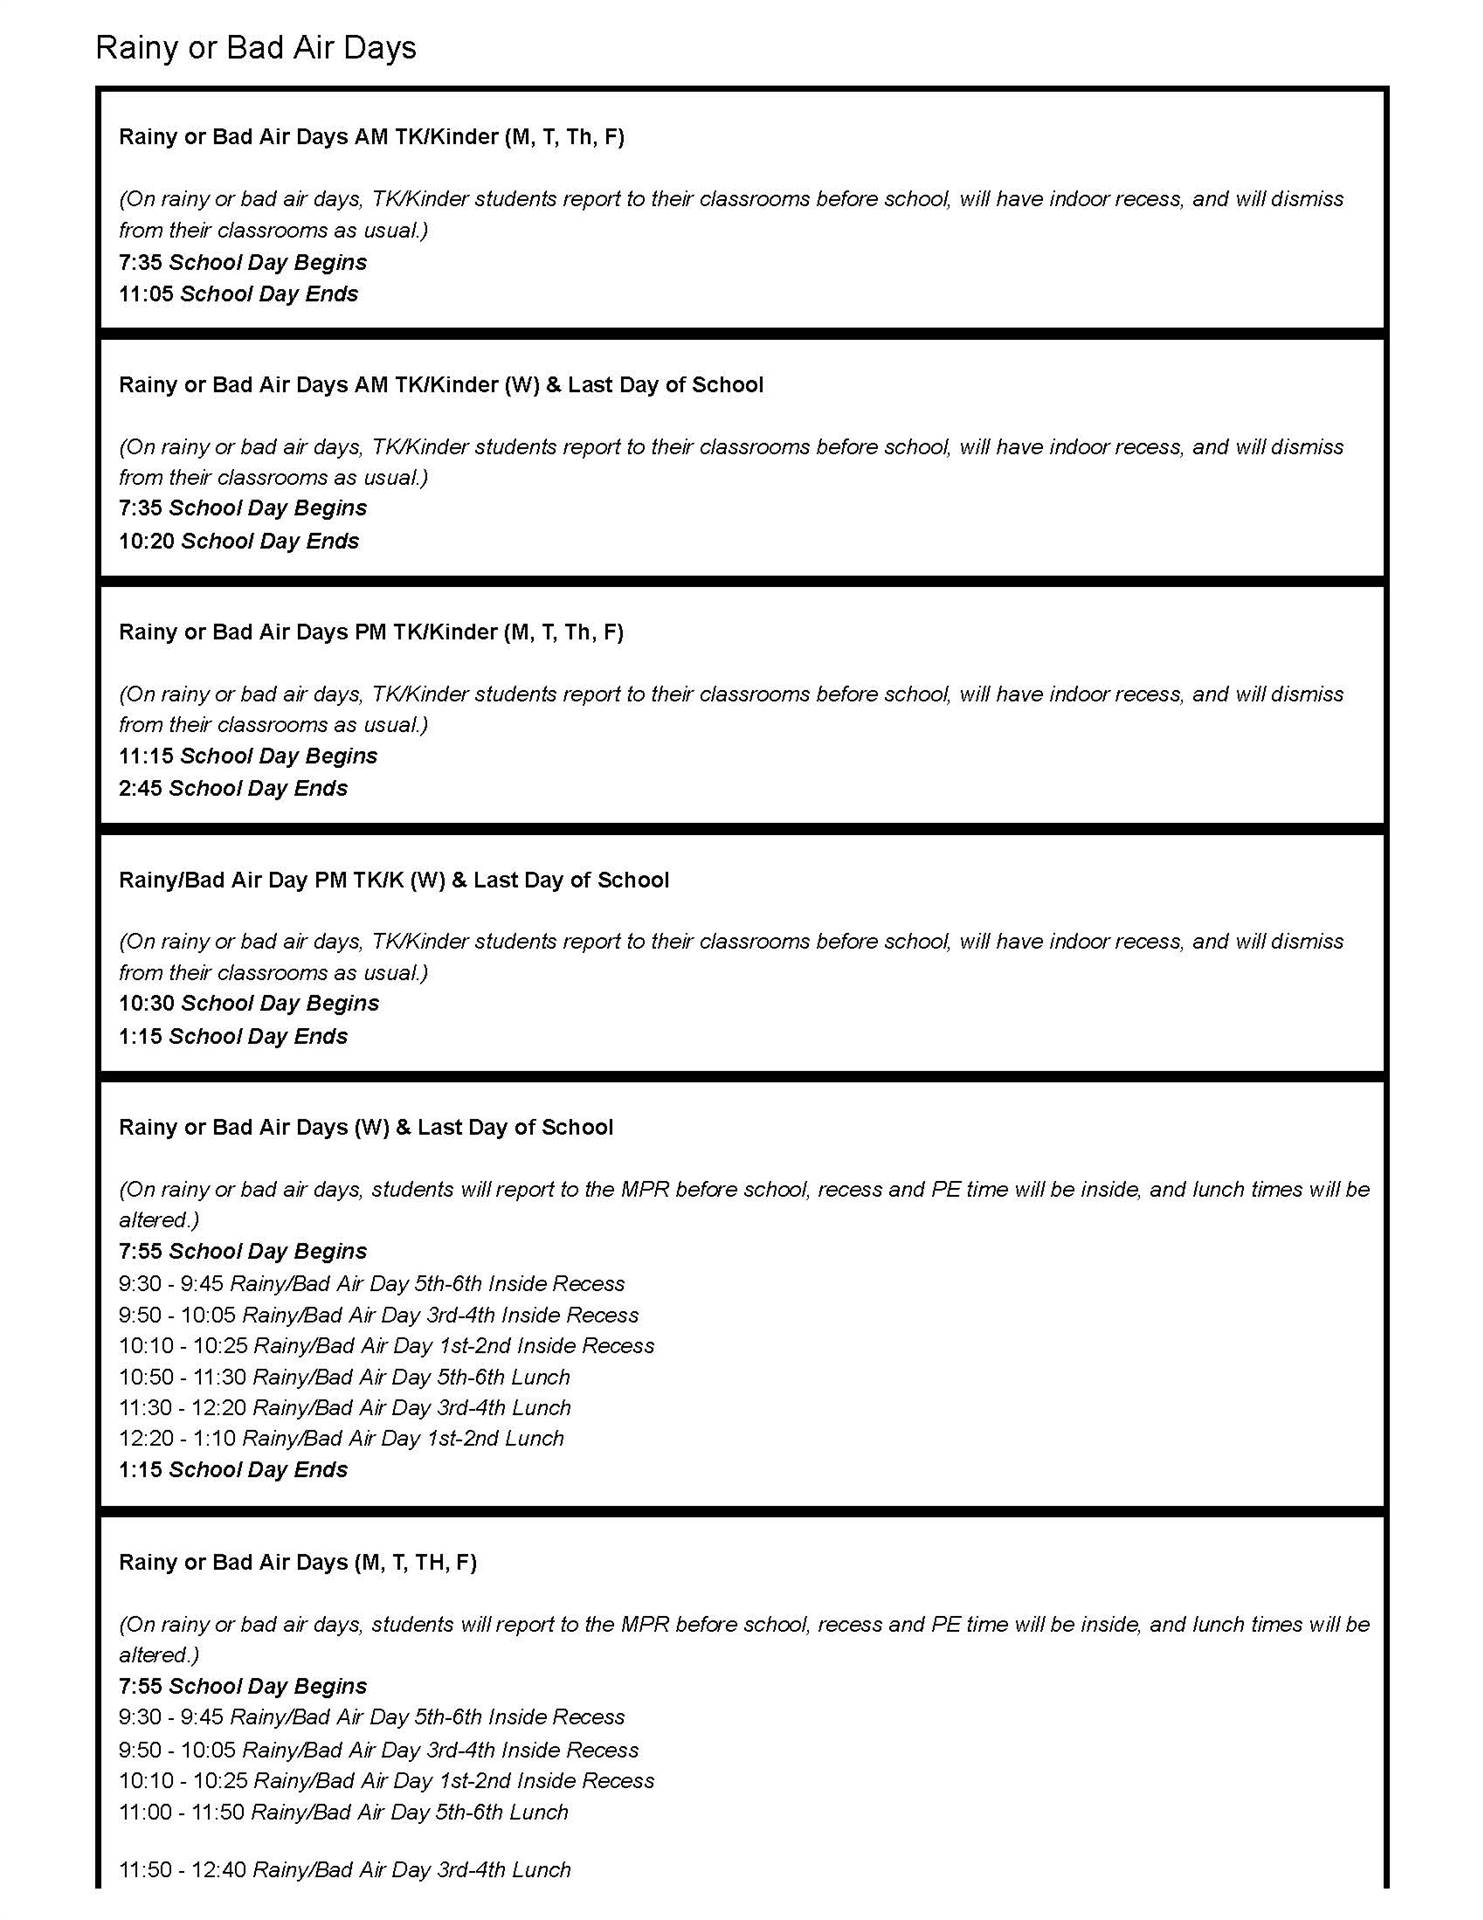 CEHS Area Bell Schedule - full text downloadable below